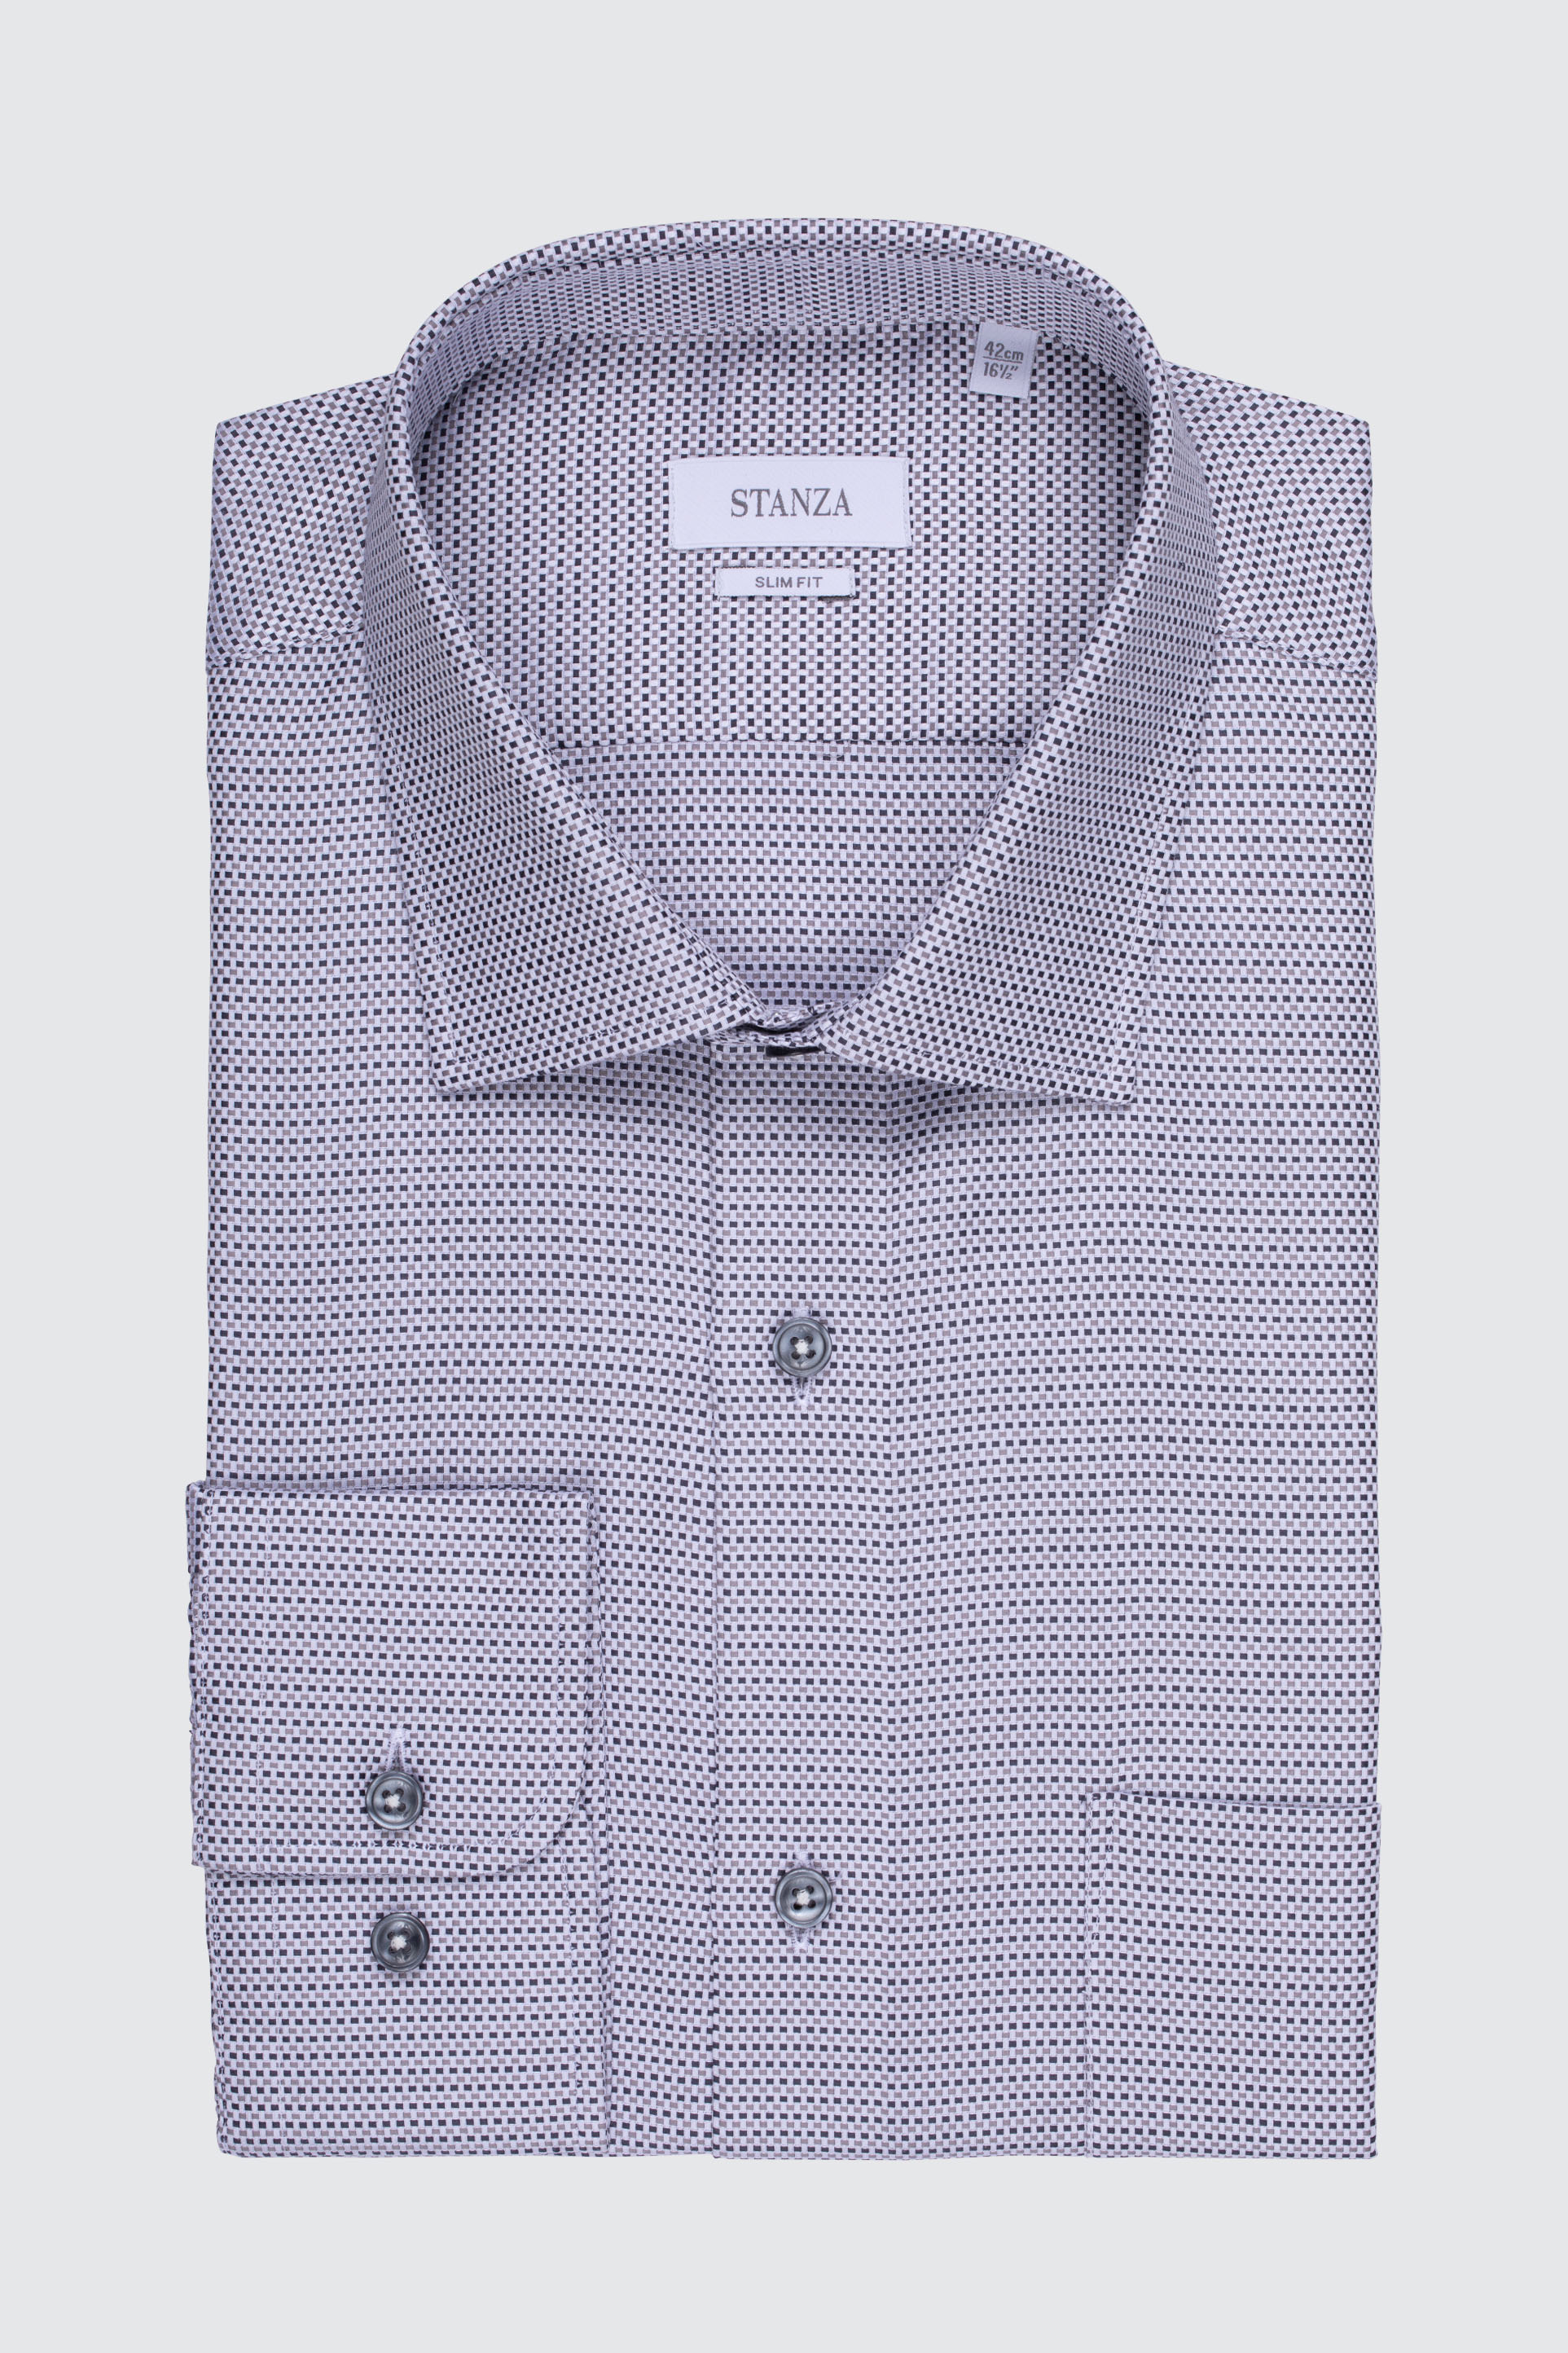 Grey Oxford Shirt | Stanza World